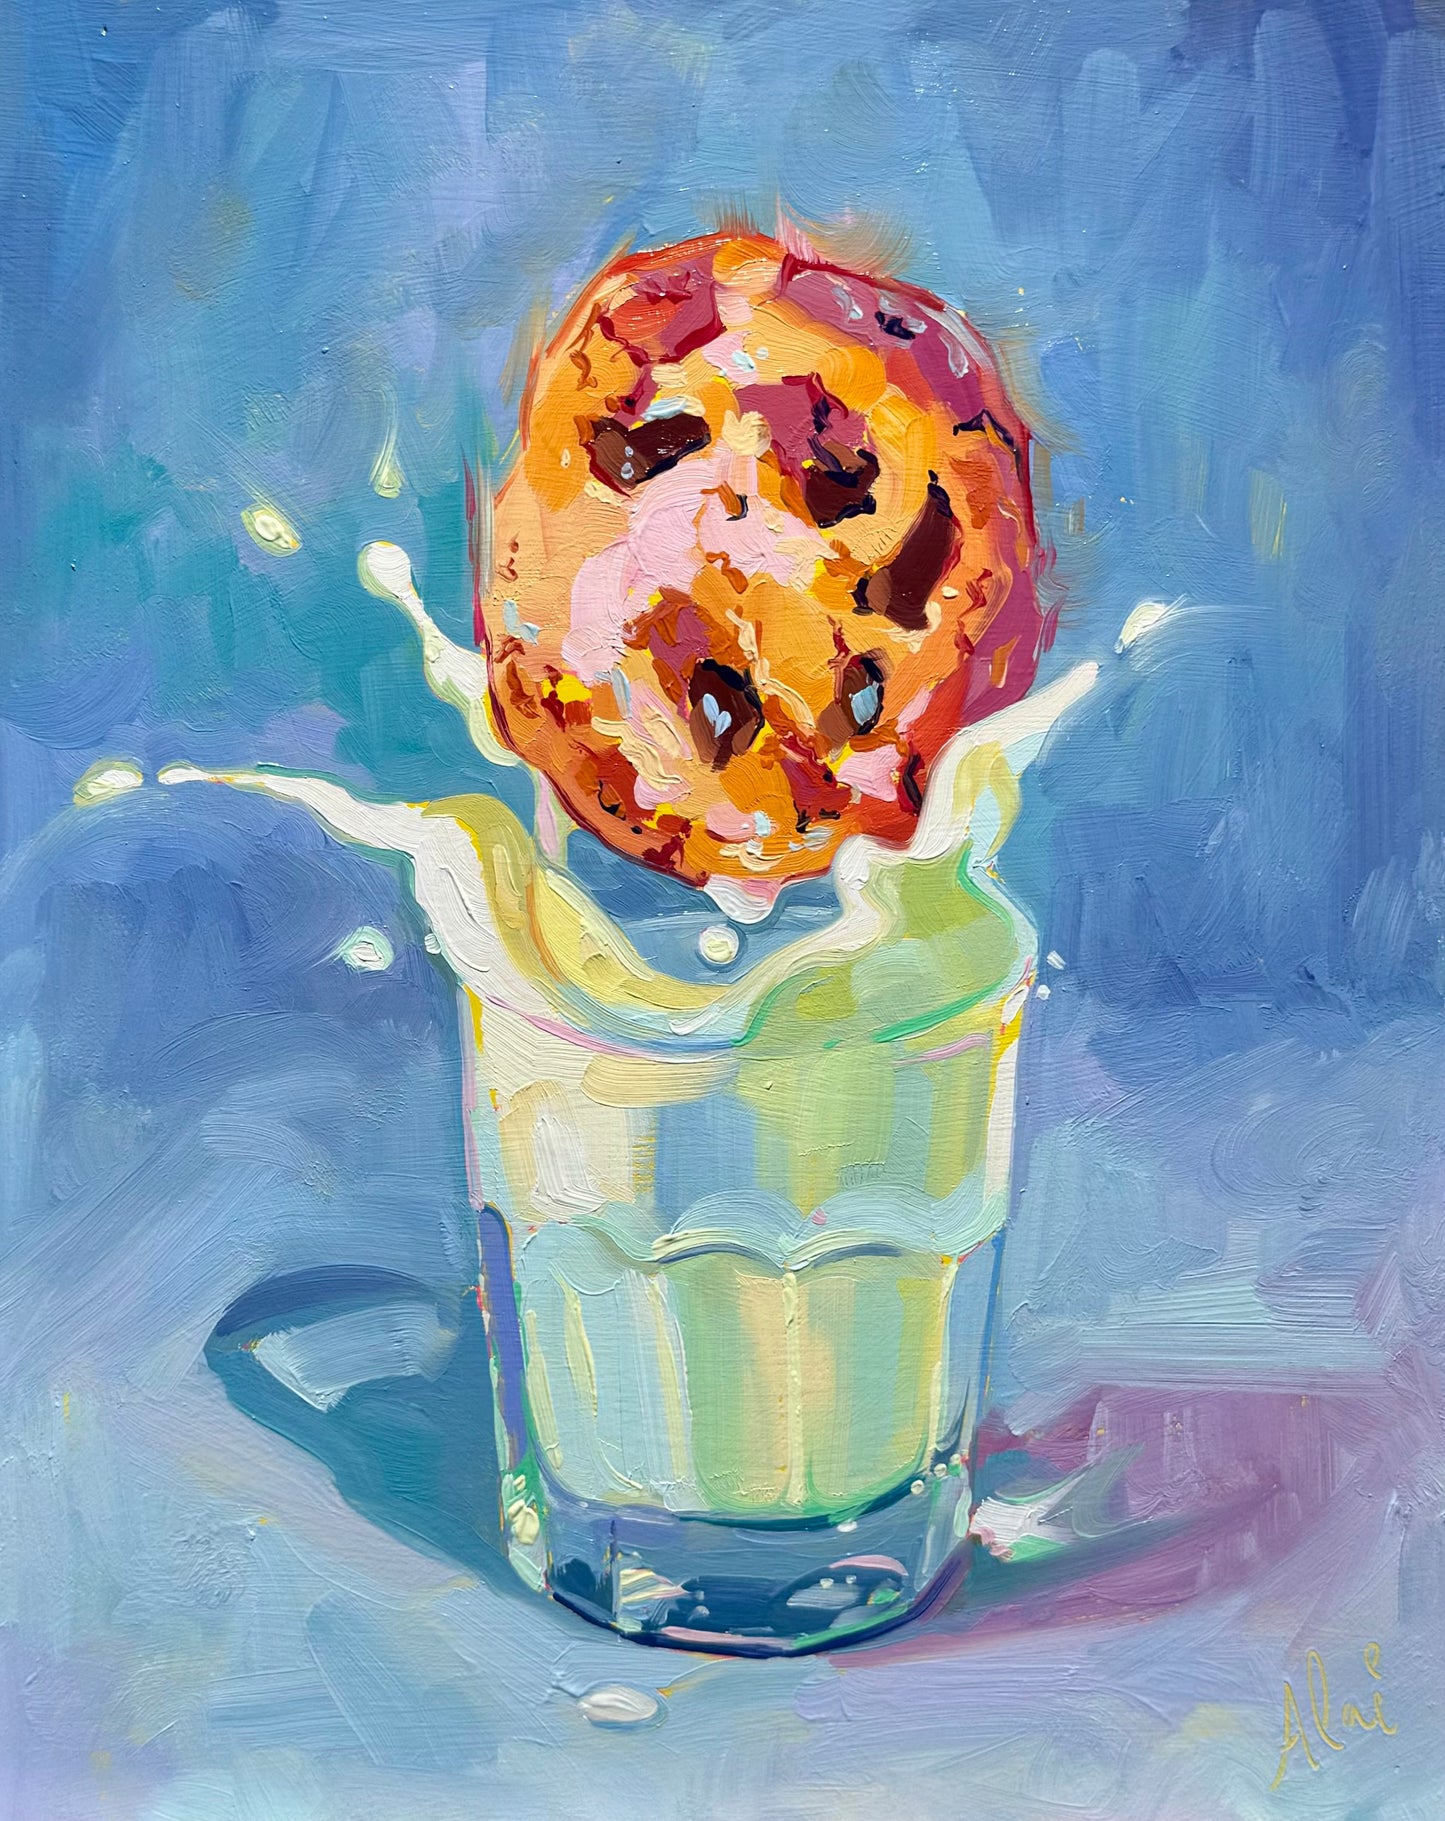 Milk and cookie - Original Oil Painting